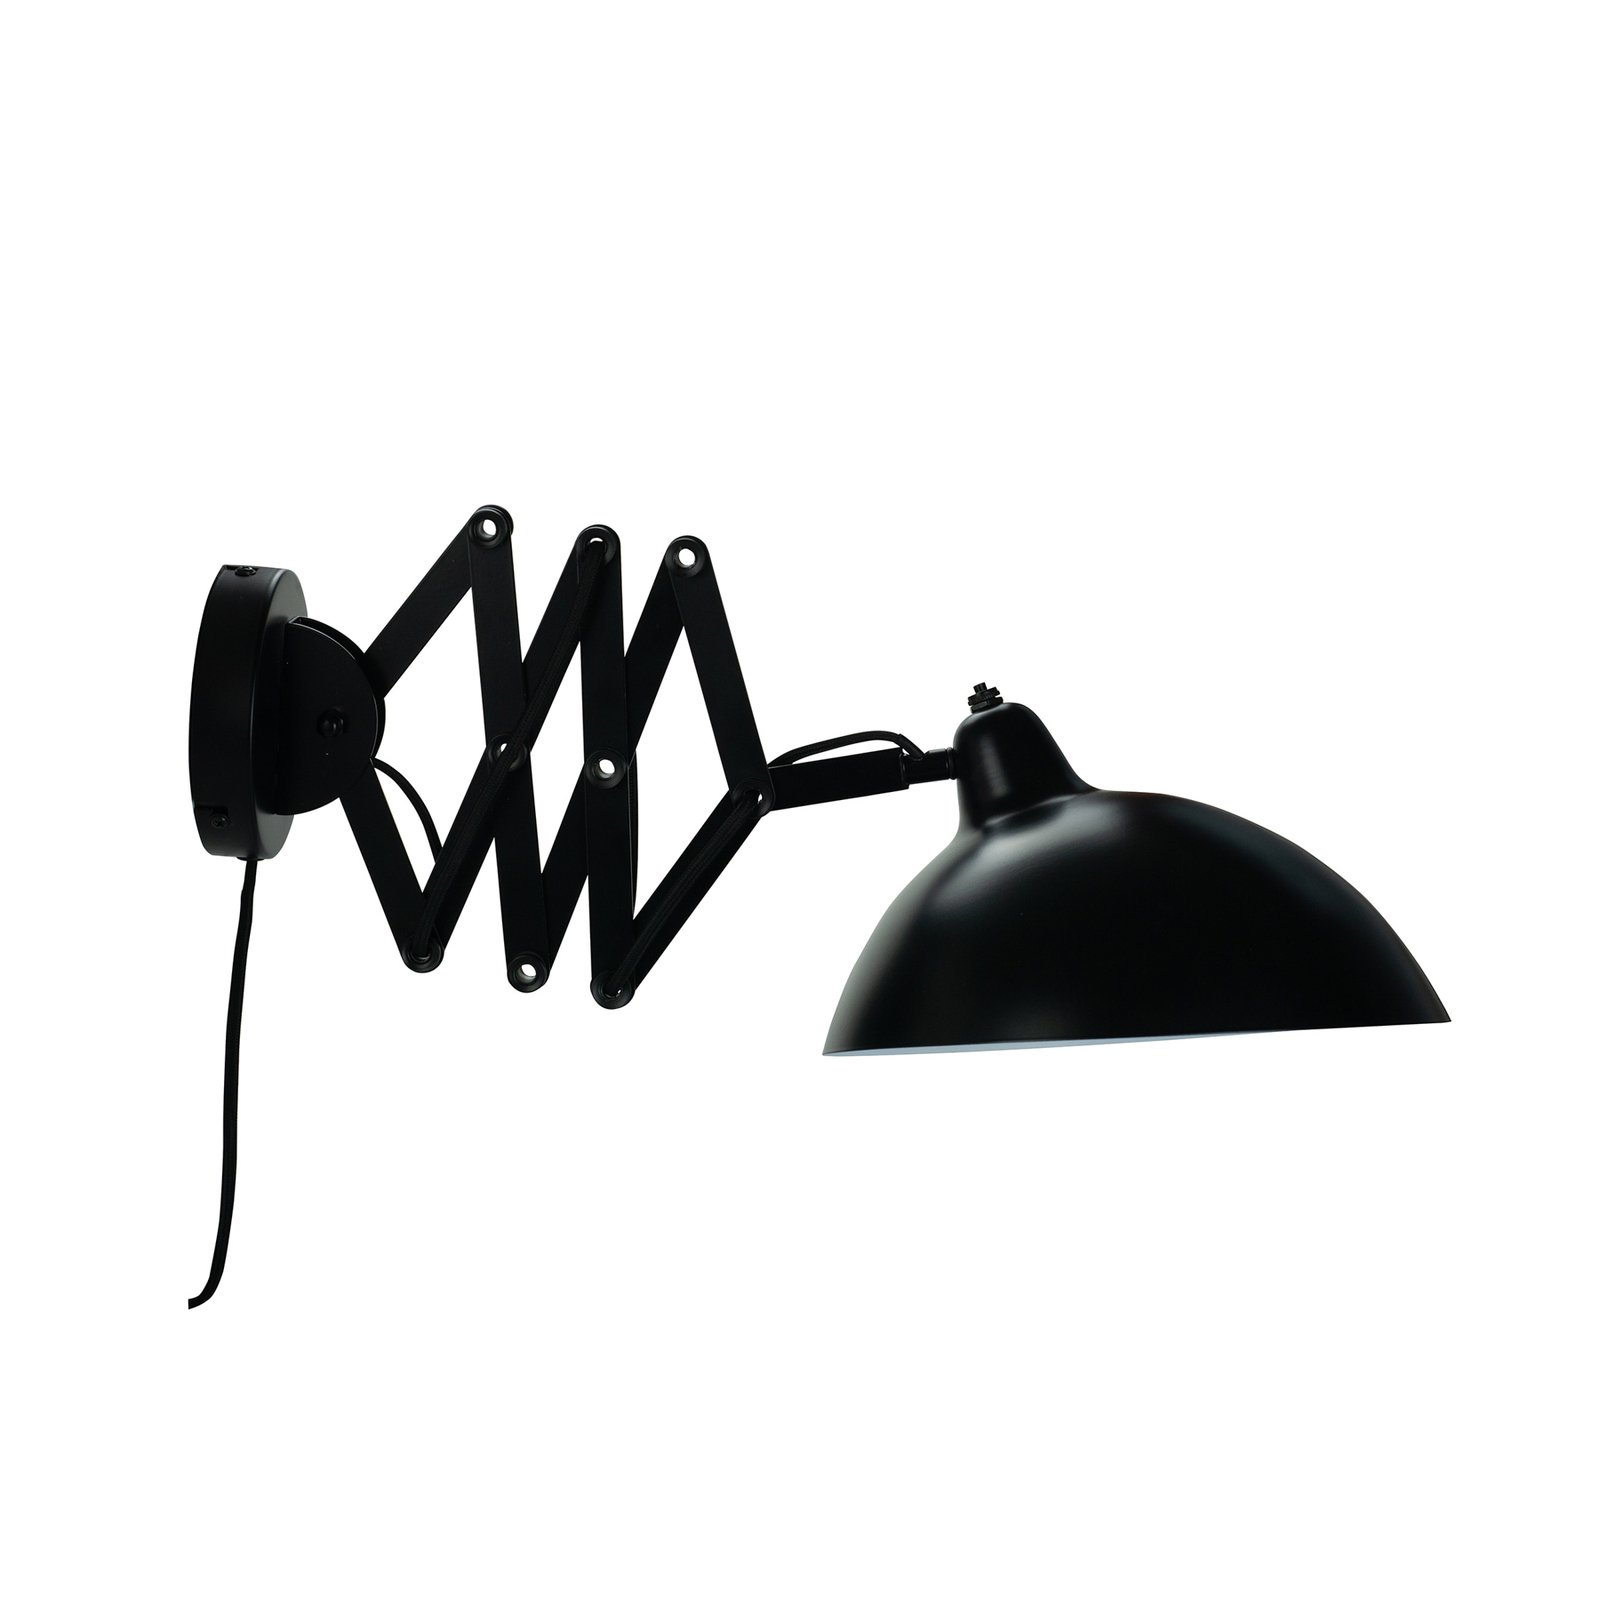 Dyberg Larsen Futura wall lamp with a scissors arm